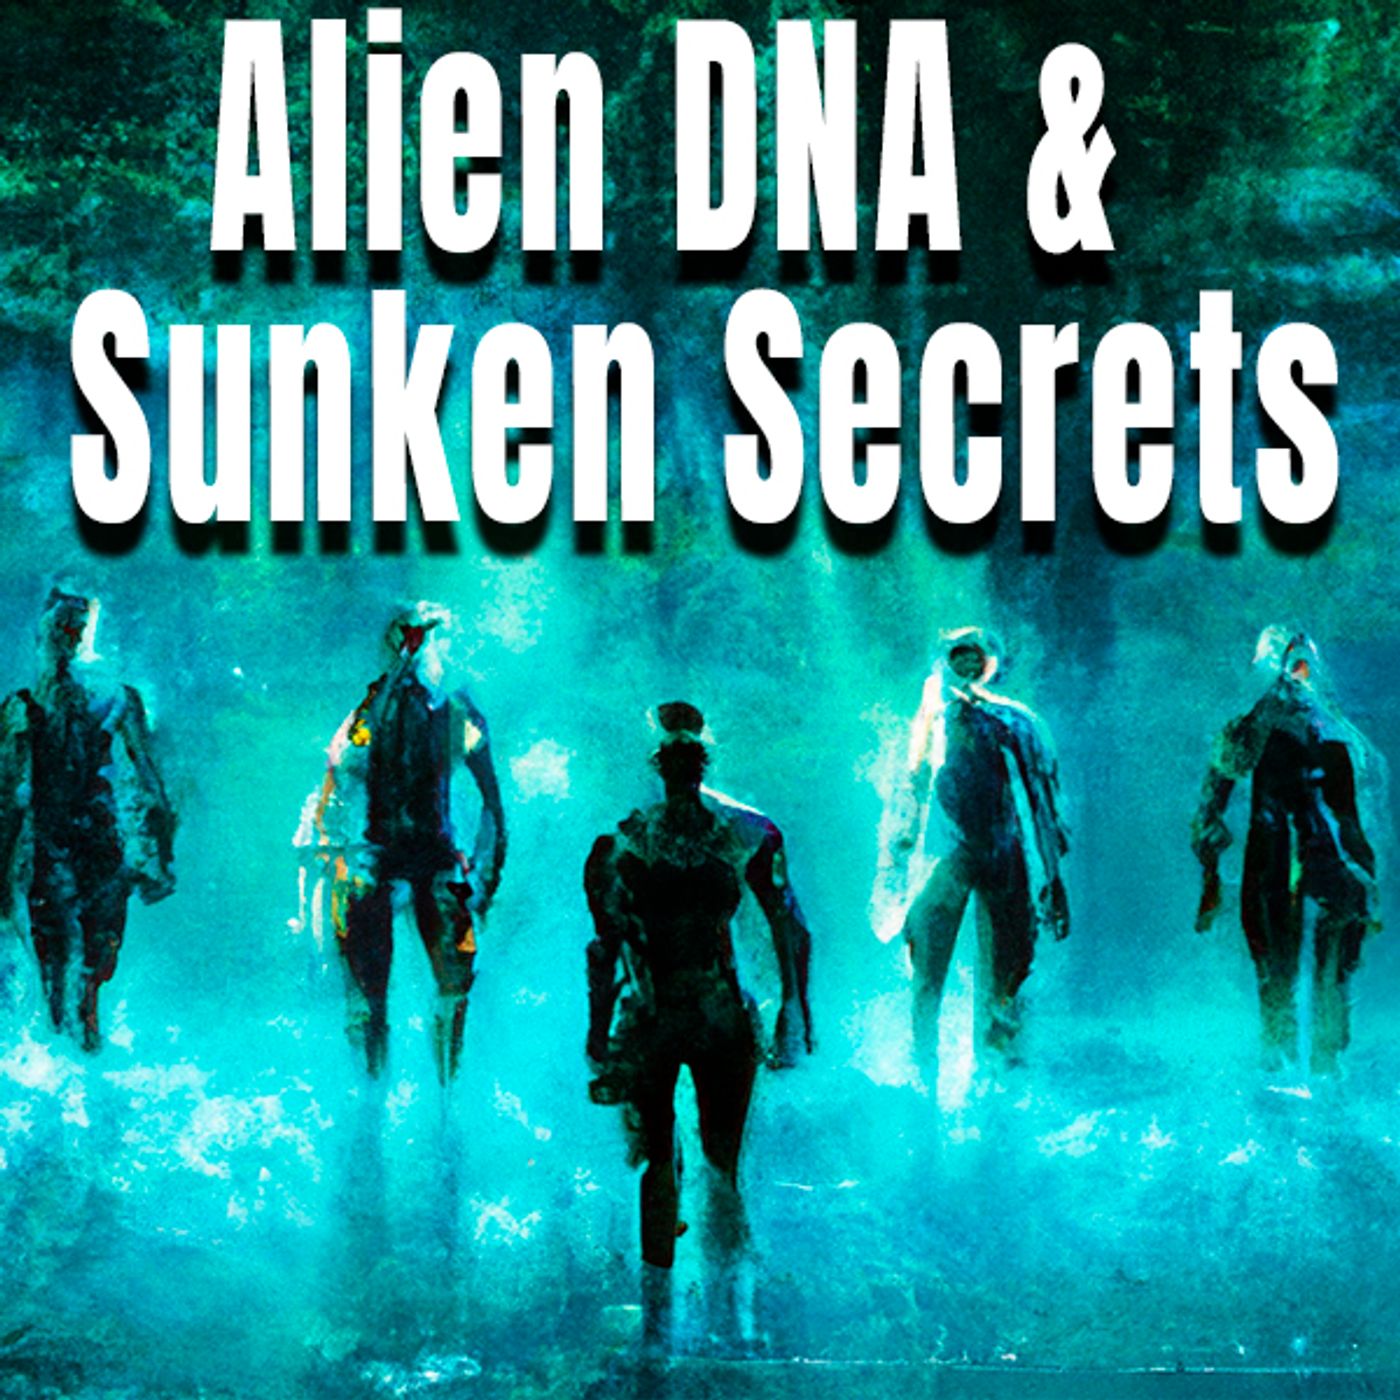 Ghost Mission: Lumira’s Alien DNA & Sunken SecretsDescription